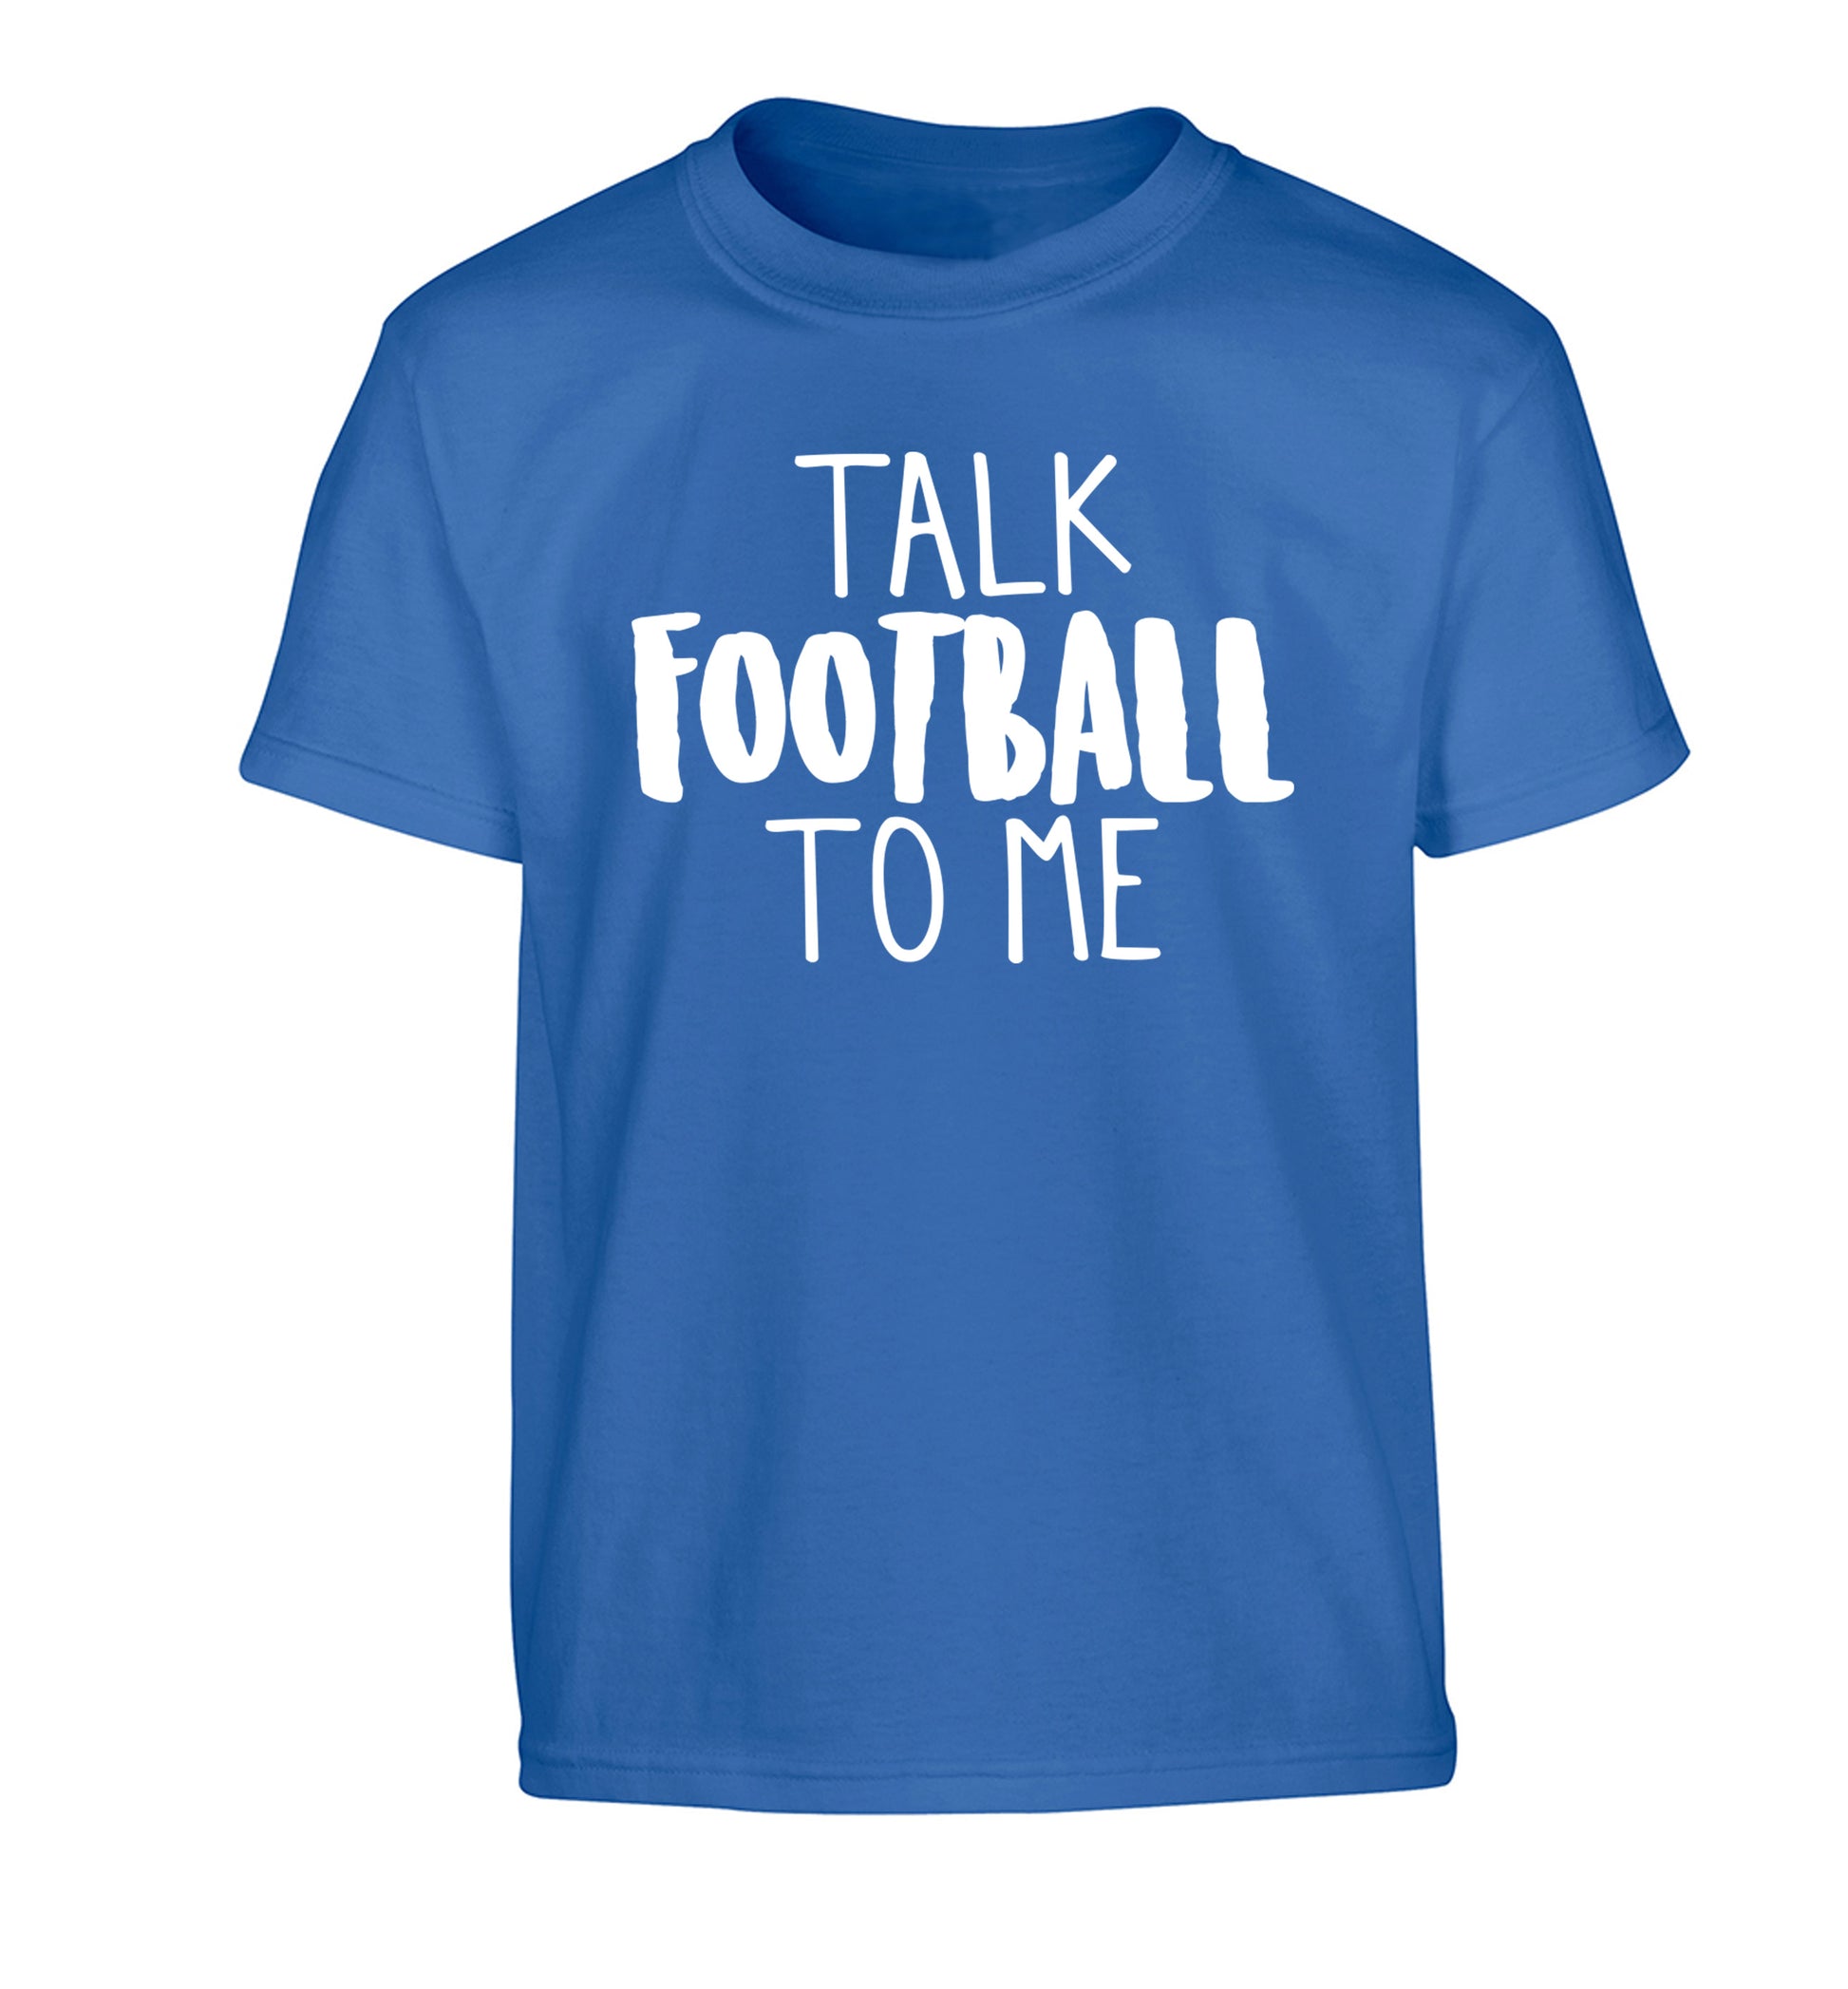 Talk football to me Children's blue Tshirt 12-14 Years